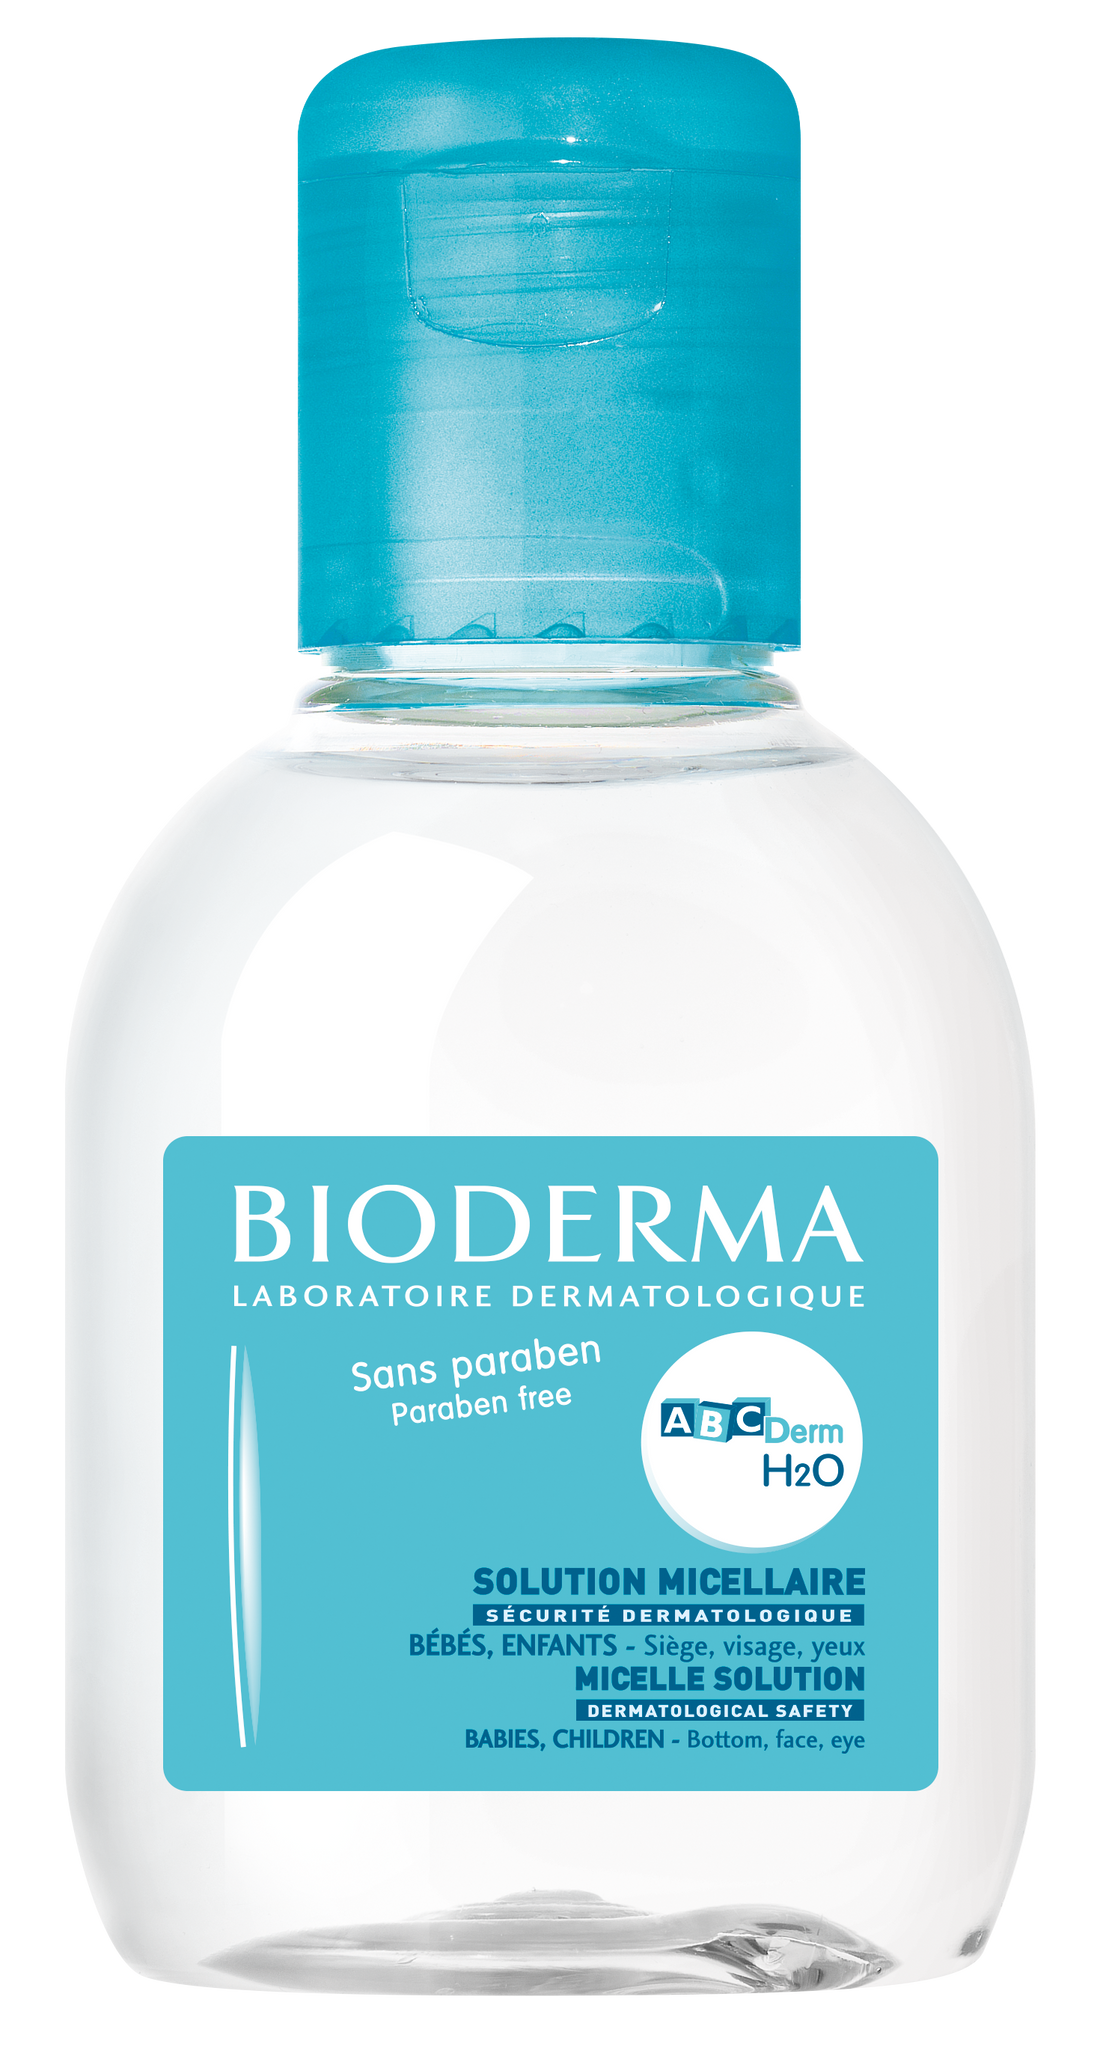 Bioderma ABCDerm H20 Micelle Solution for Sensitive Skin 100ml